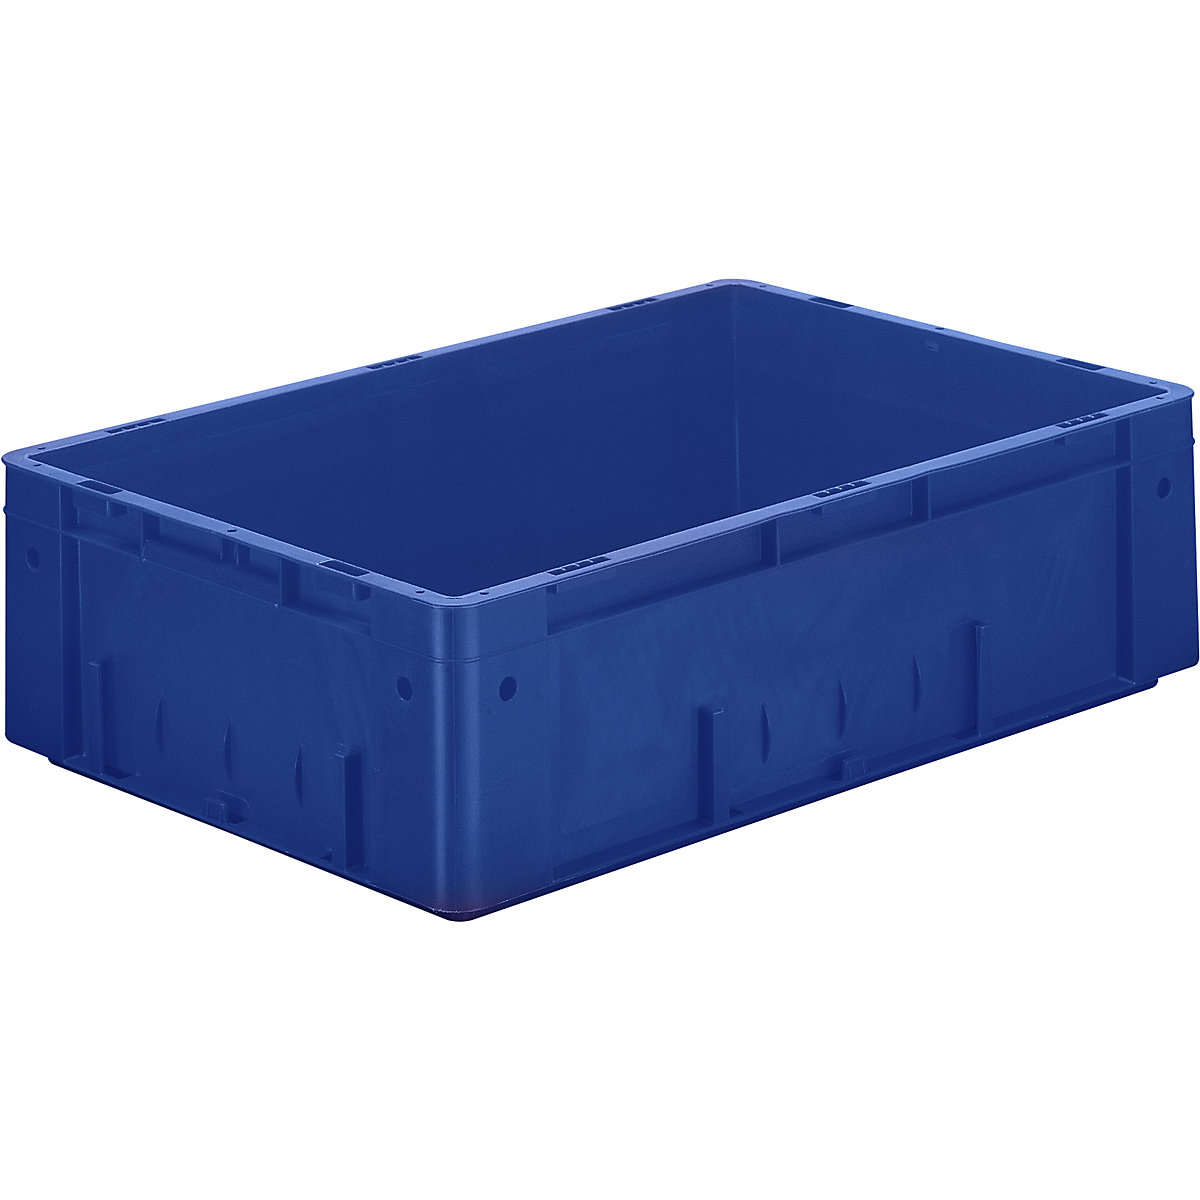 Schwerlast-Euro-Behälter, Polypropylen, Volumen 31 l, LxBxH 600 x 400 x 175 mm, Wände geschlossen, Boden geschlossen, blau, VE 2 Stk-3